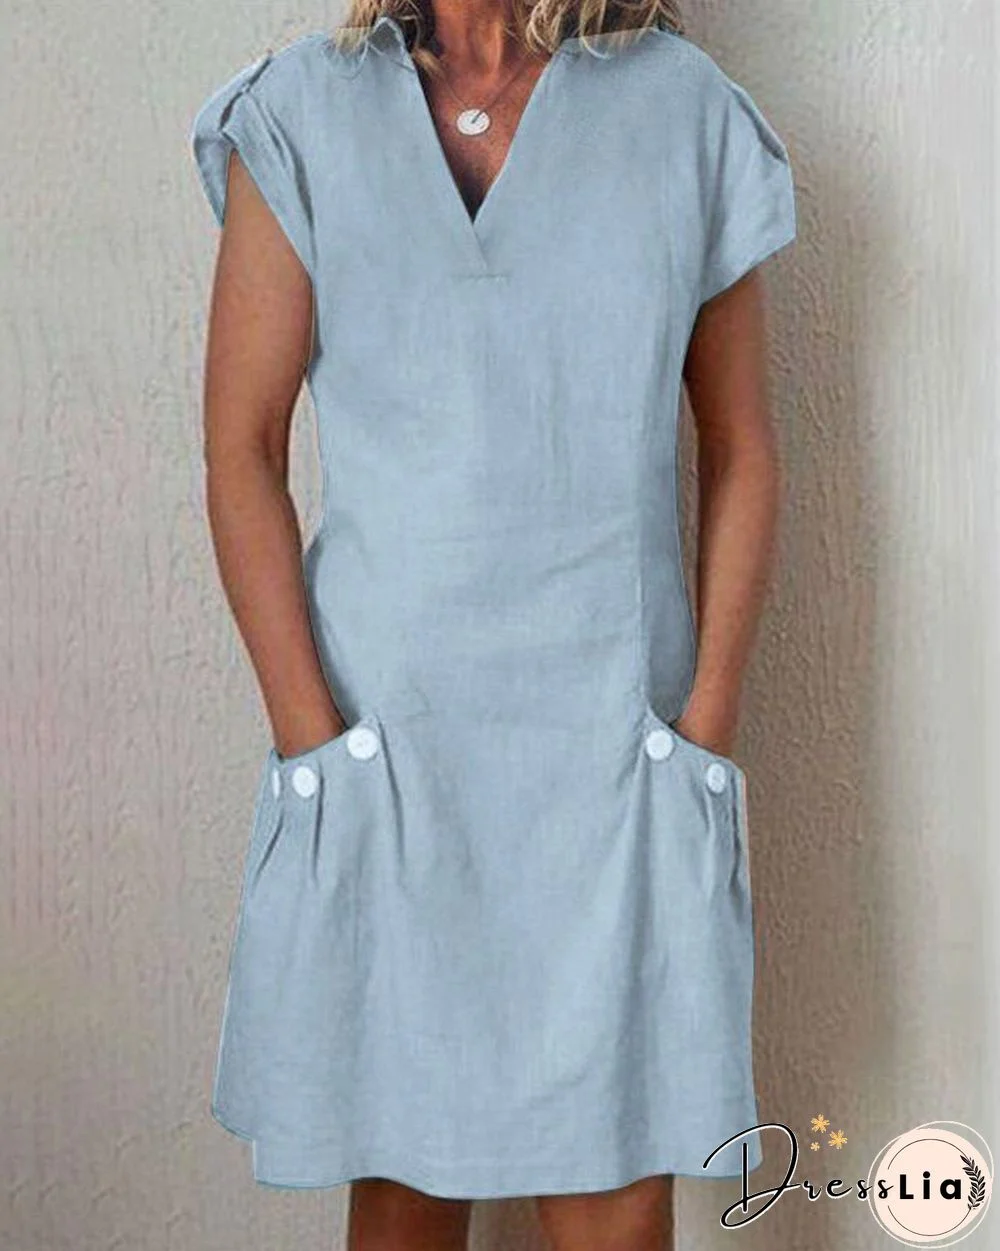 Solid Short Sleeve Casual Mini Dress